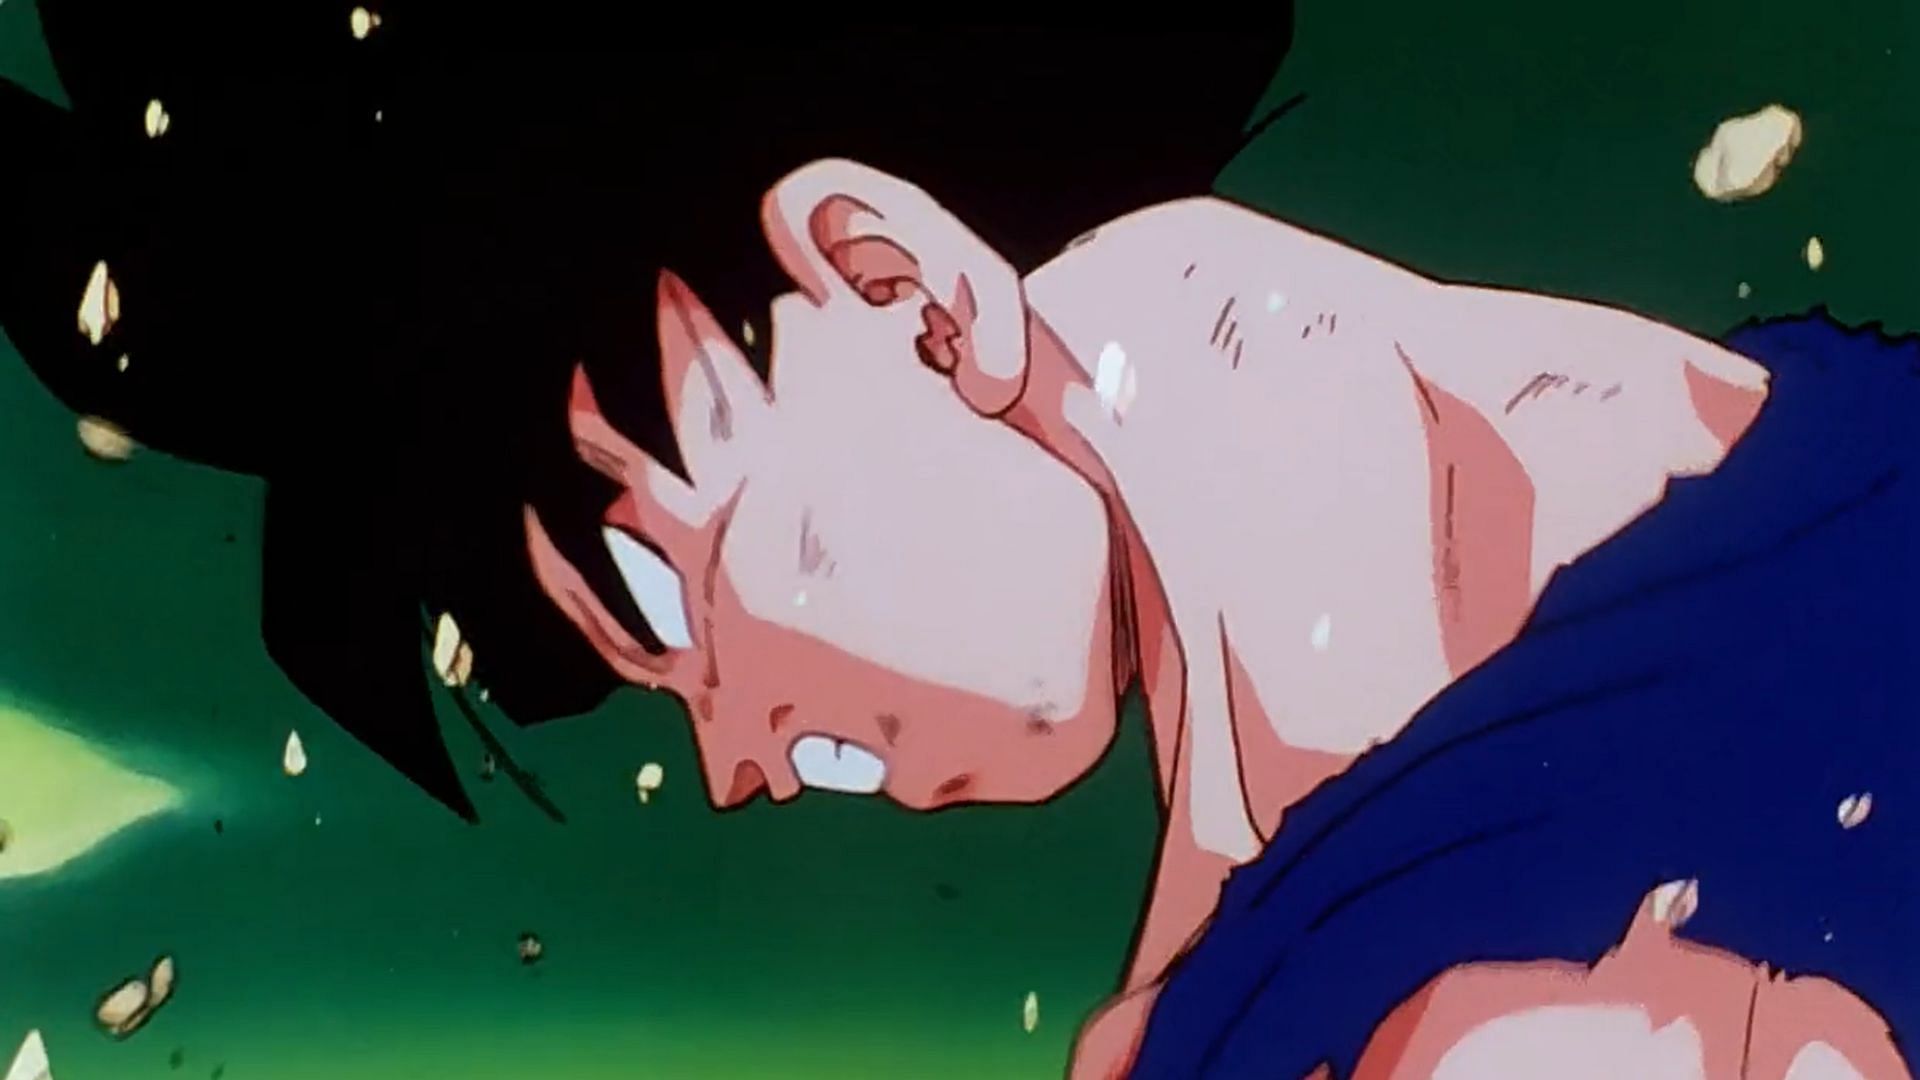 Goku as seen in Dragon Ball Z (Image via Toei Animation)